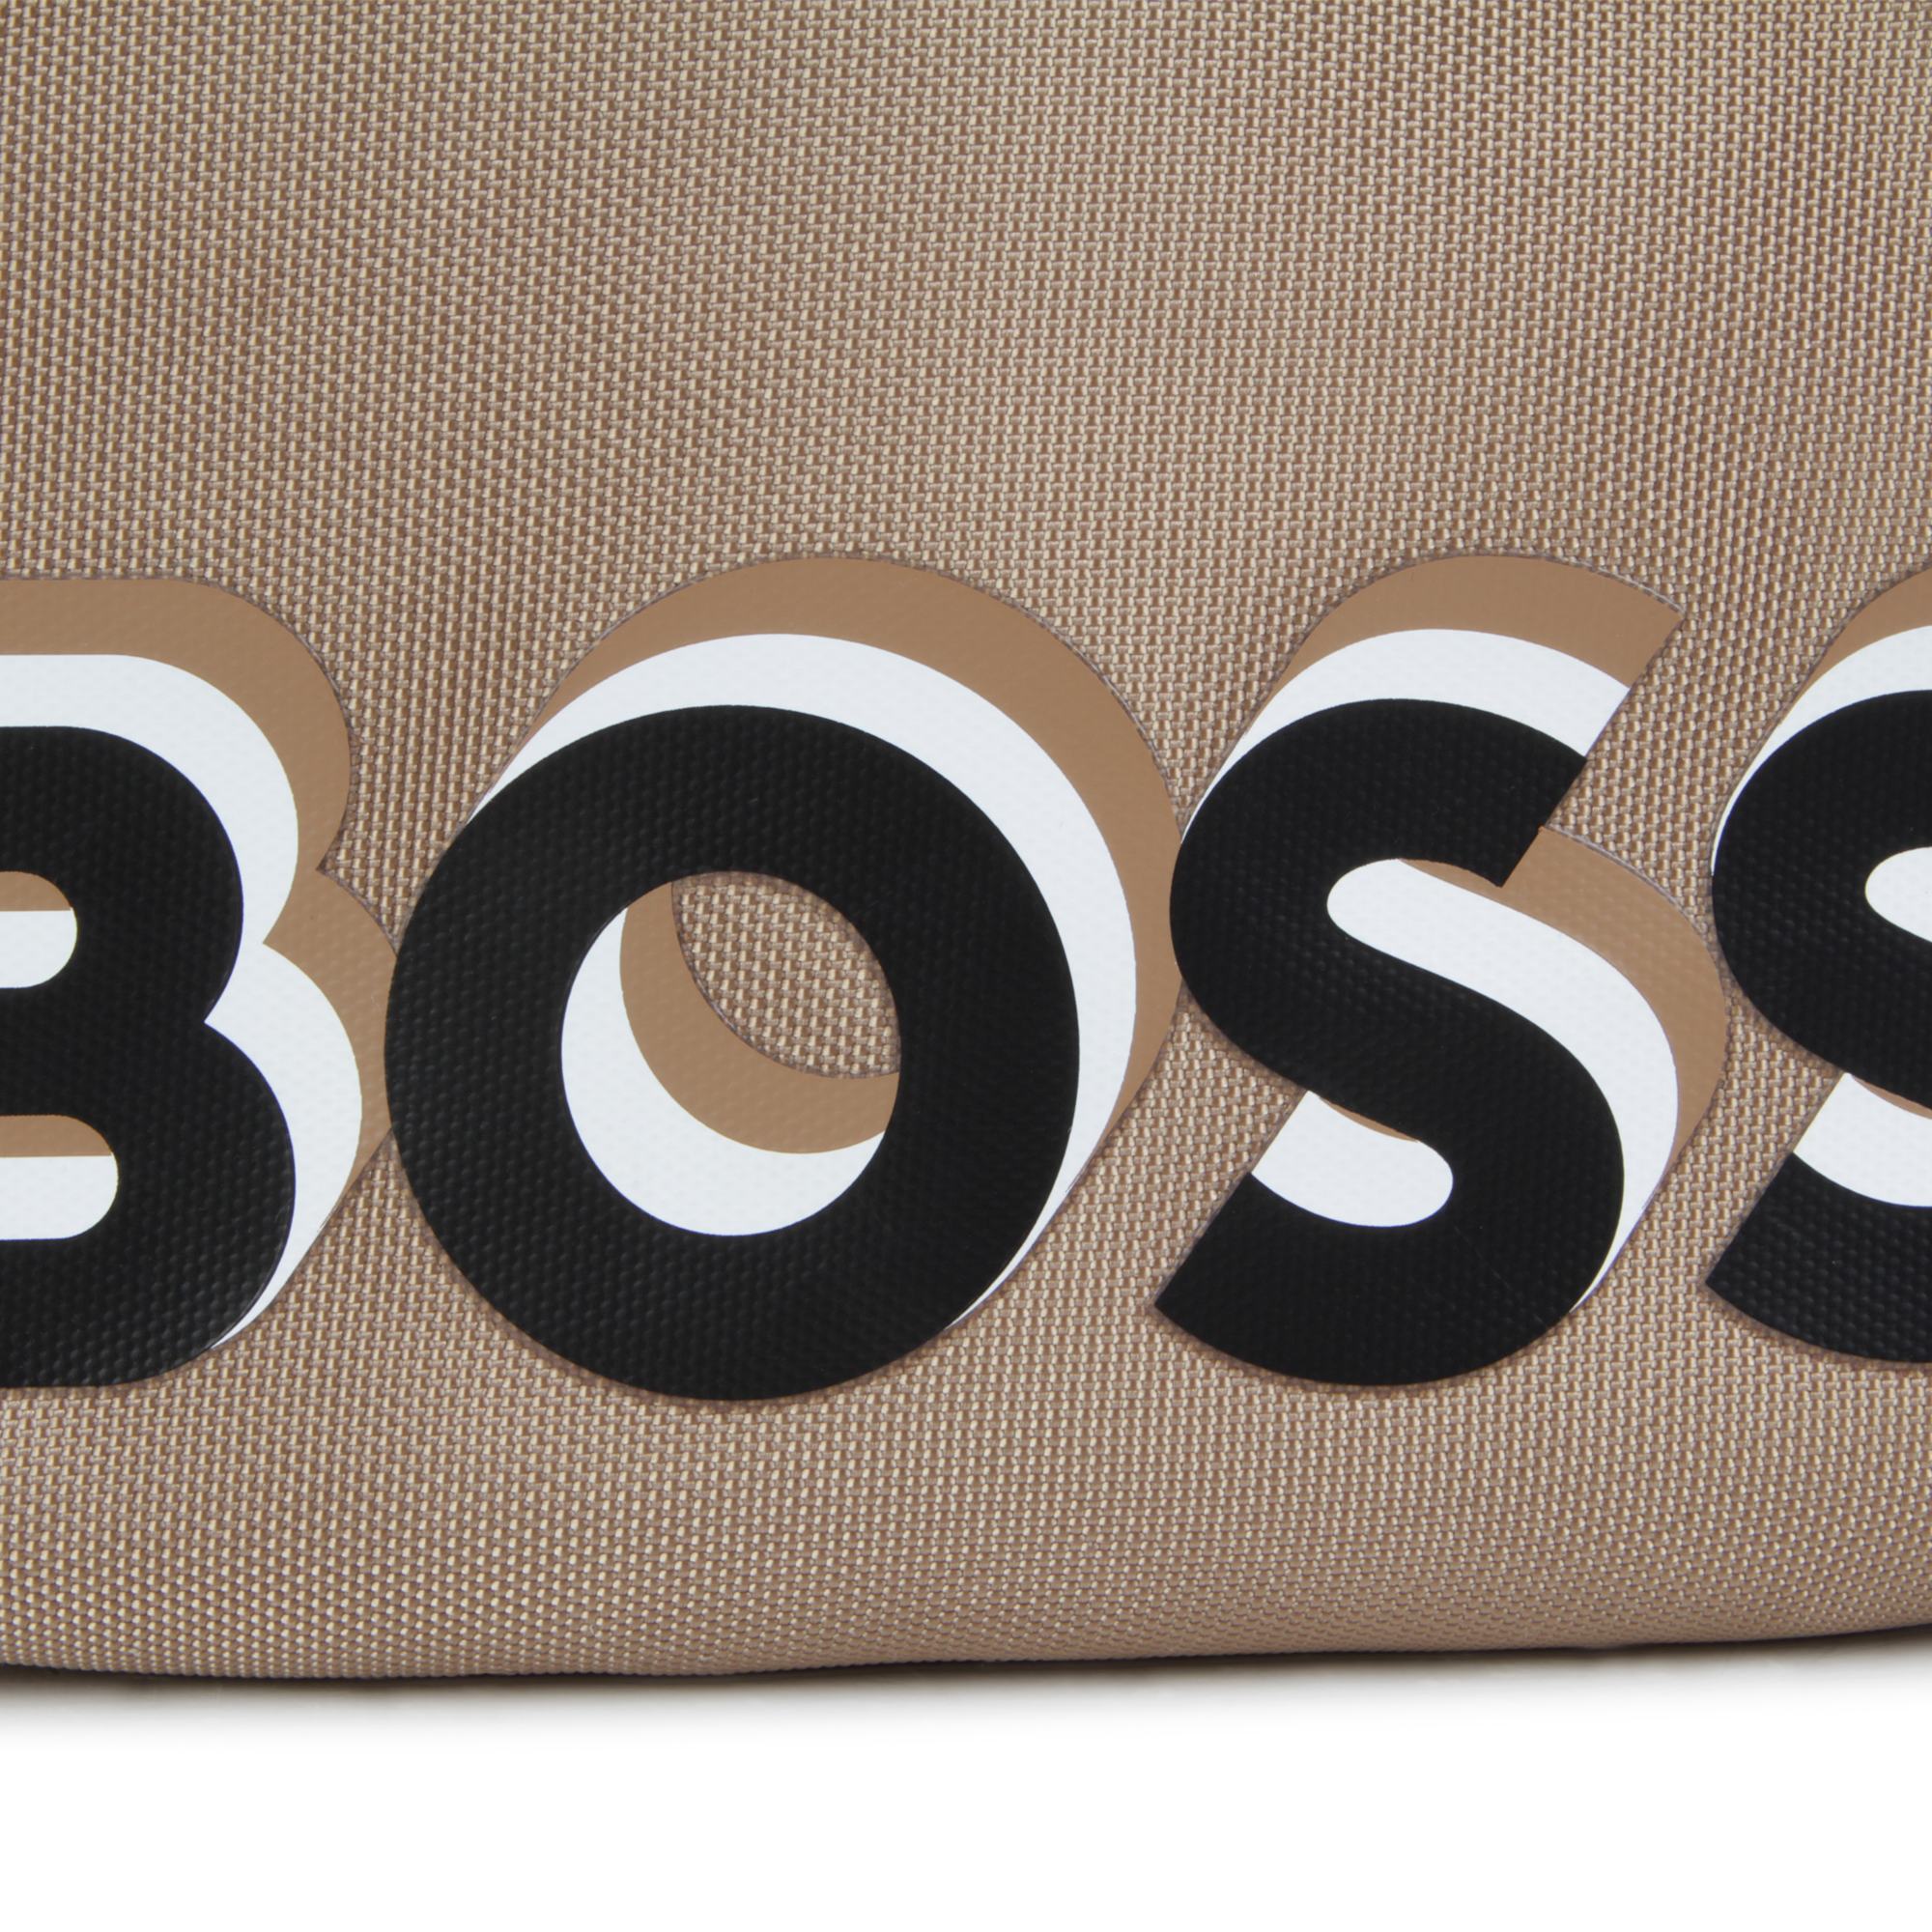 BOSS logo fabric shoulder bag BOSS for BOY